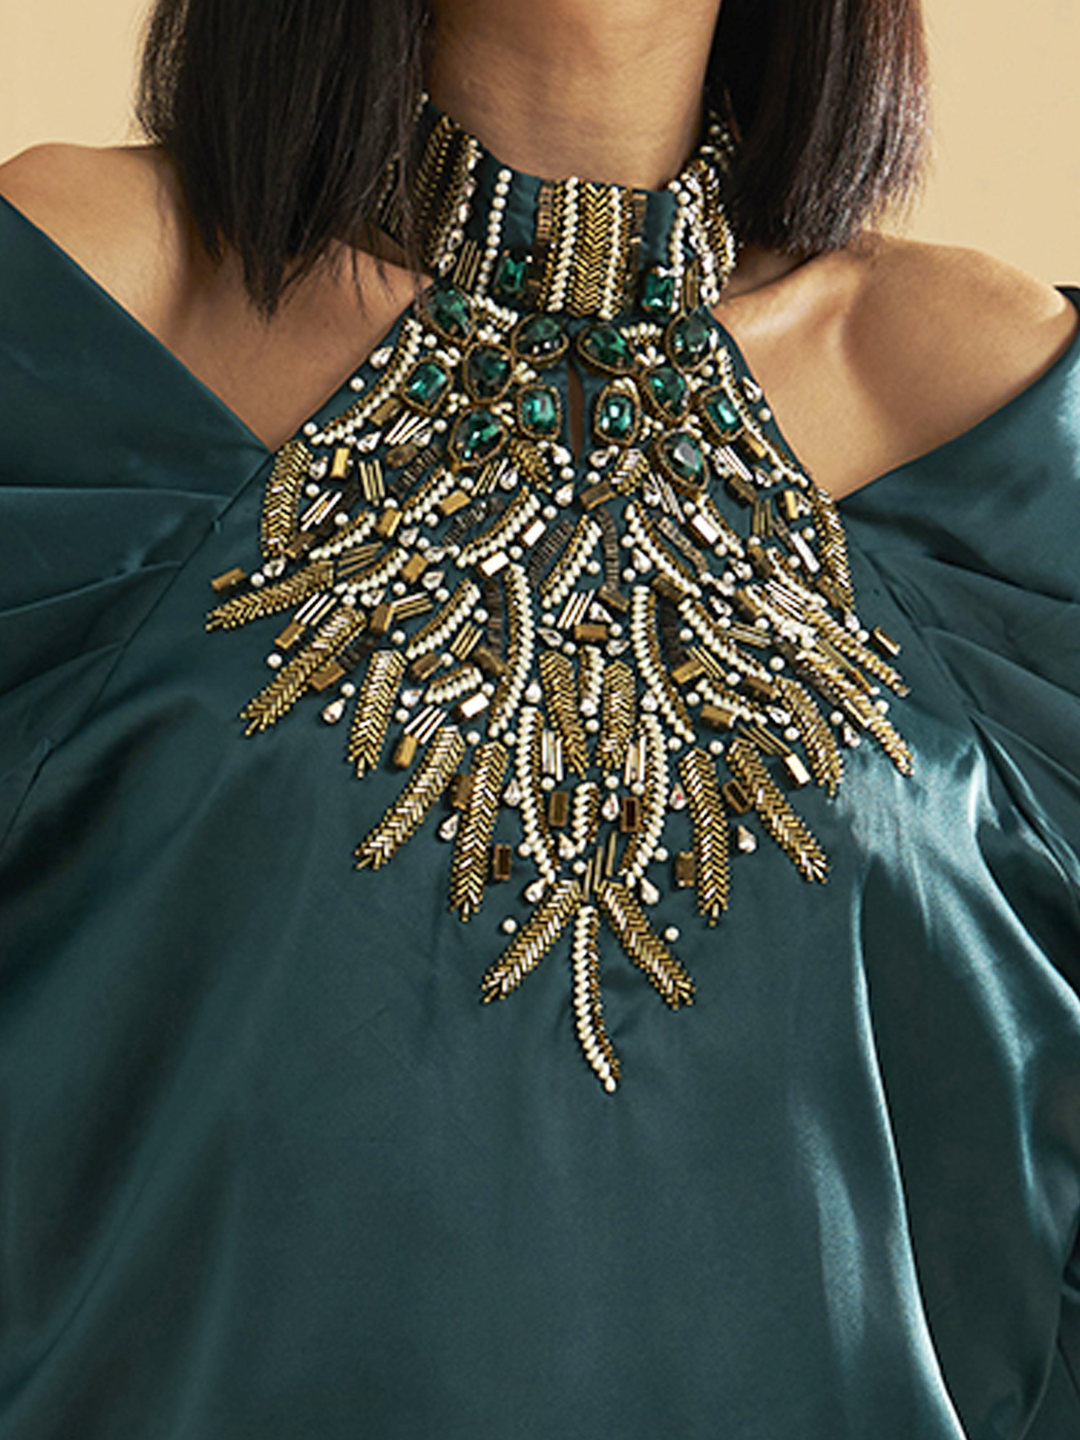 Kate Middleton Emerald Jewelry - Duchess of Cambridge Redid Emerald Jewelry